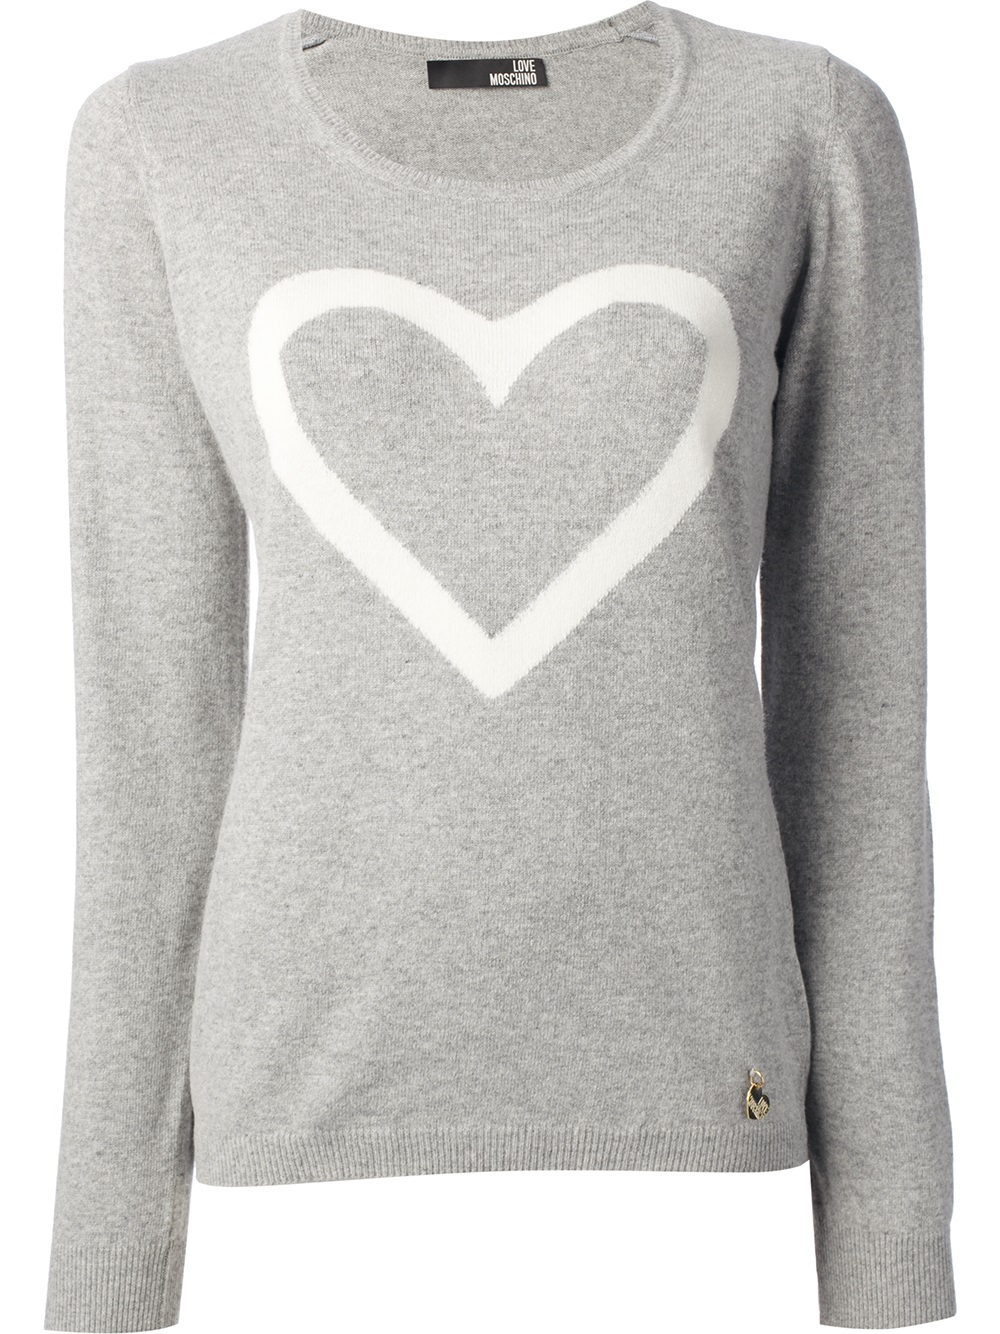 Lyst - Love moschino Heart Sweater in Gray